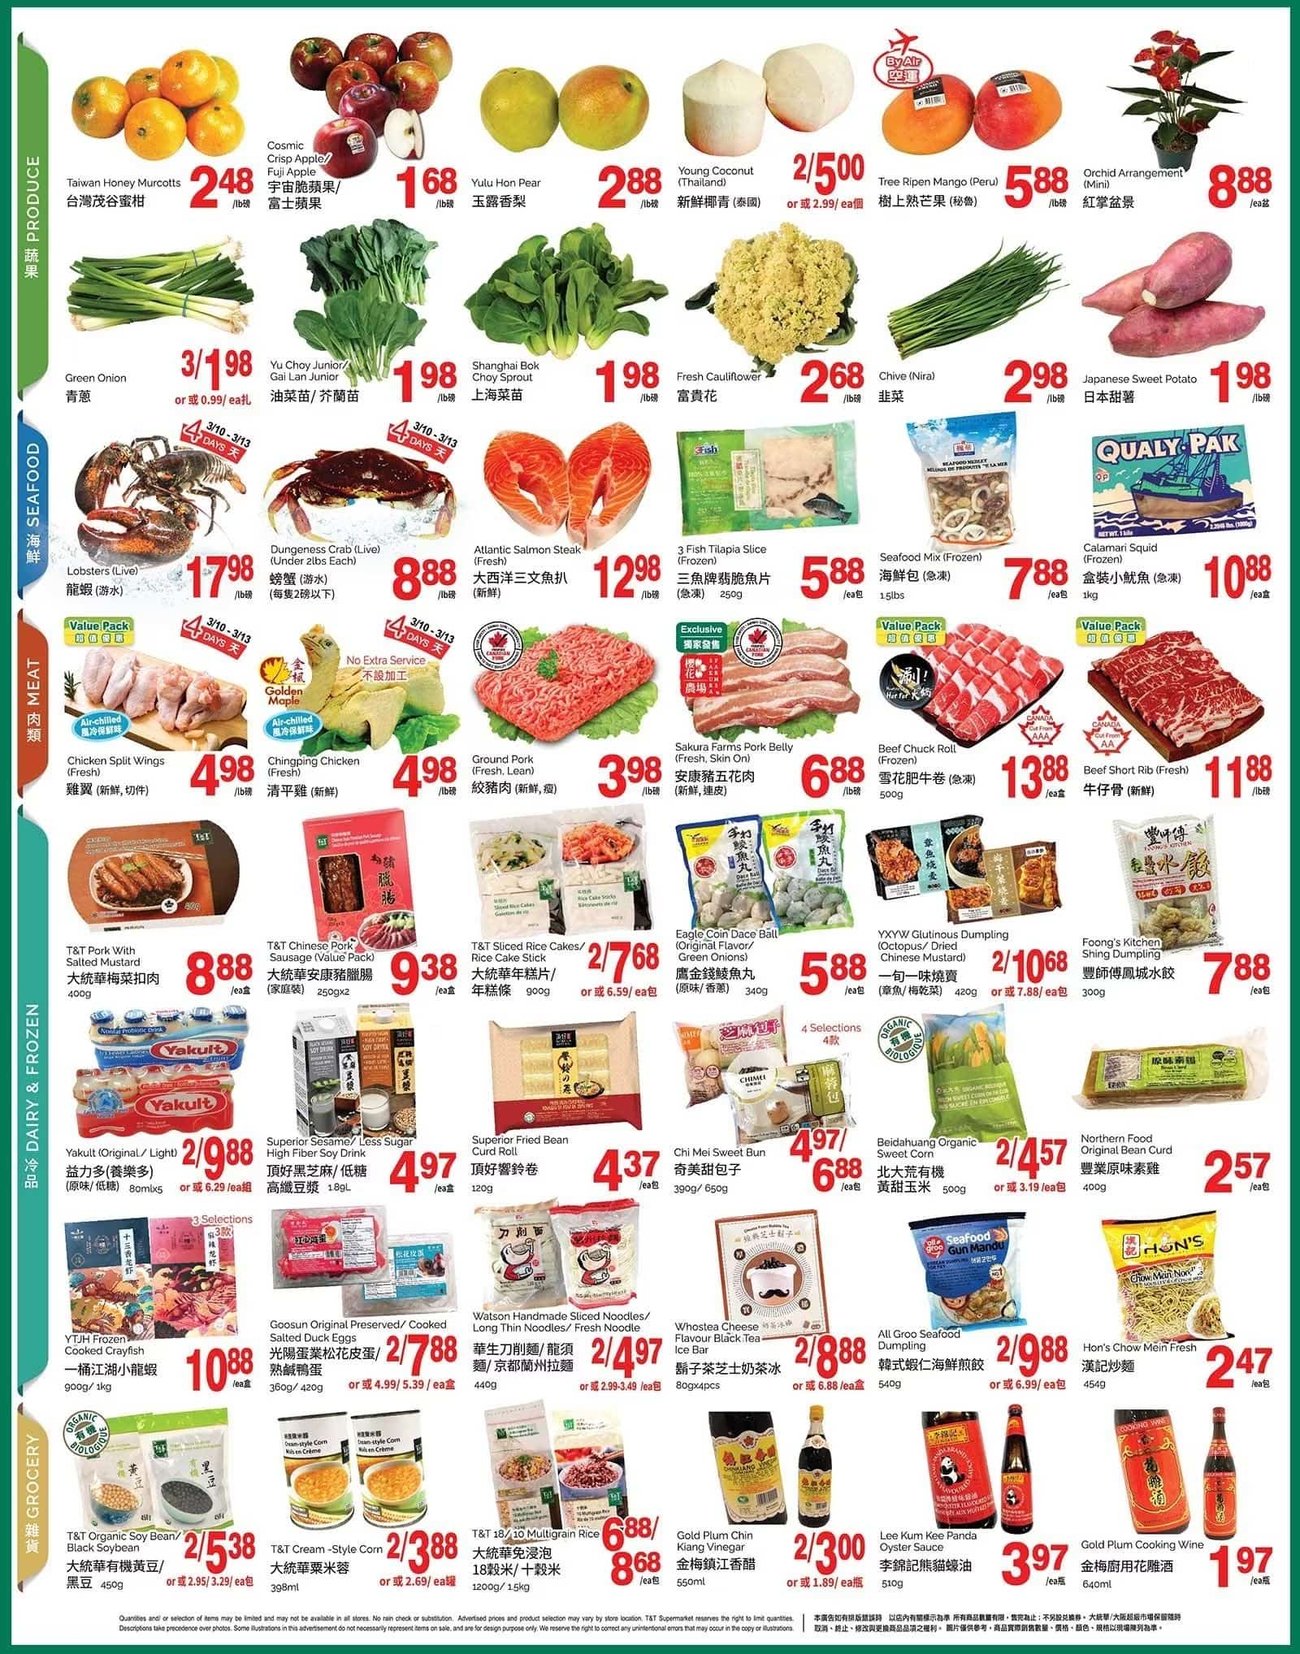 T & T Supermarket - Alberta - Weekly Flyer Specials - Page 2